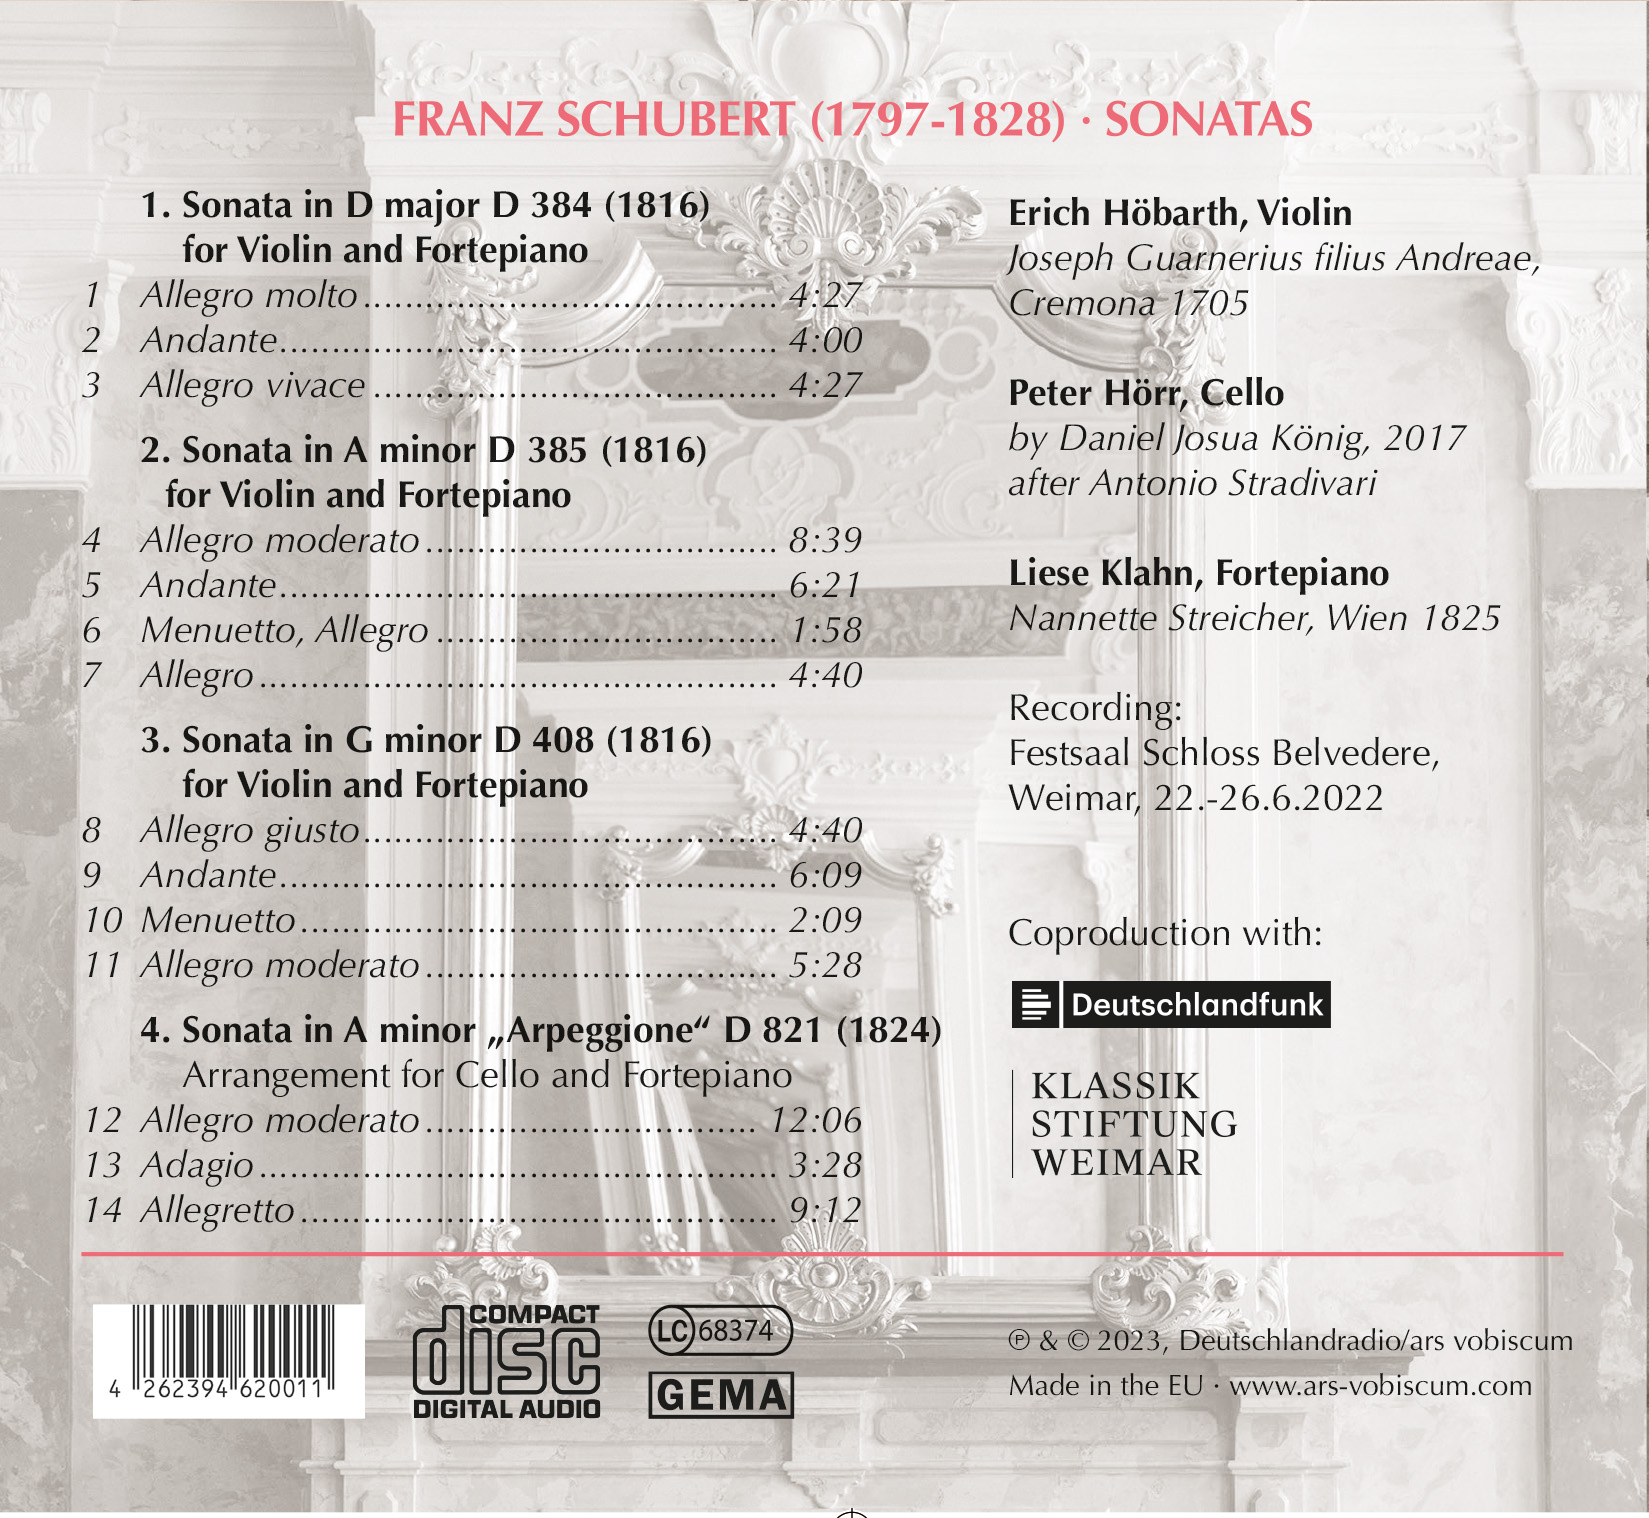 Schubert: Sonatas